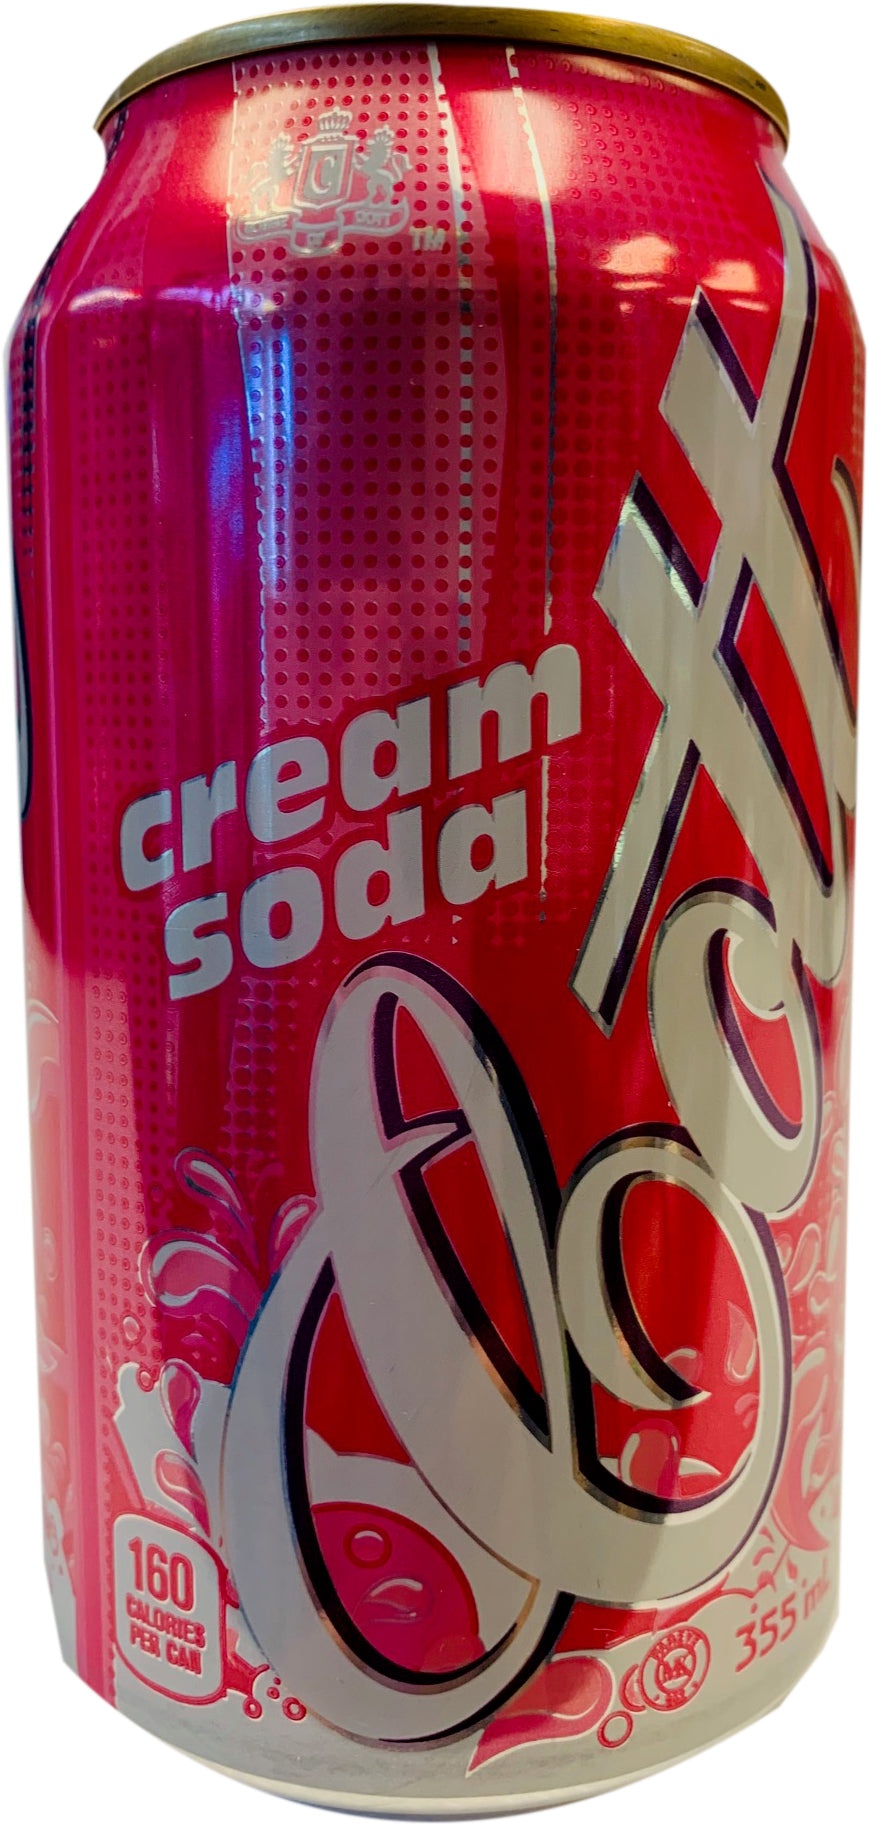 Cott - Cream Soda (355ml Can)